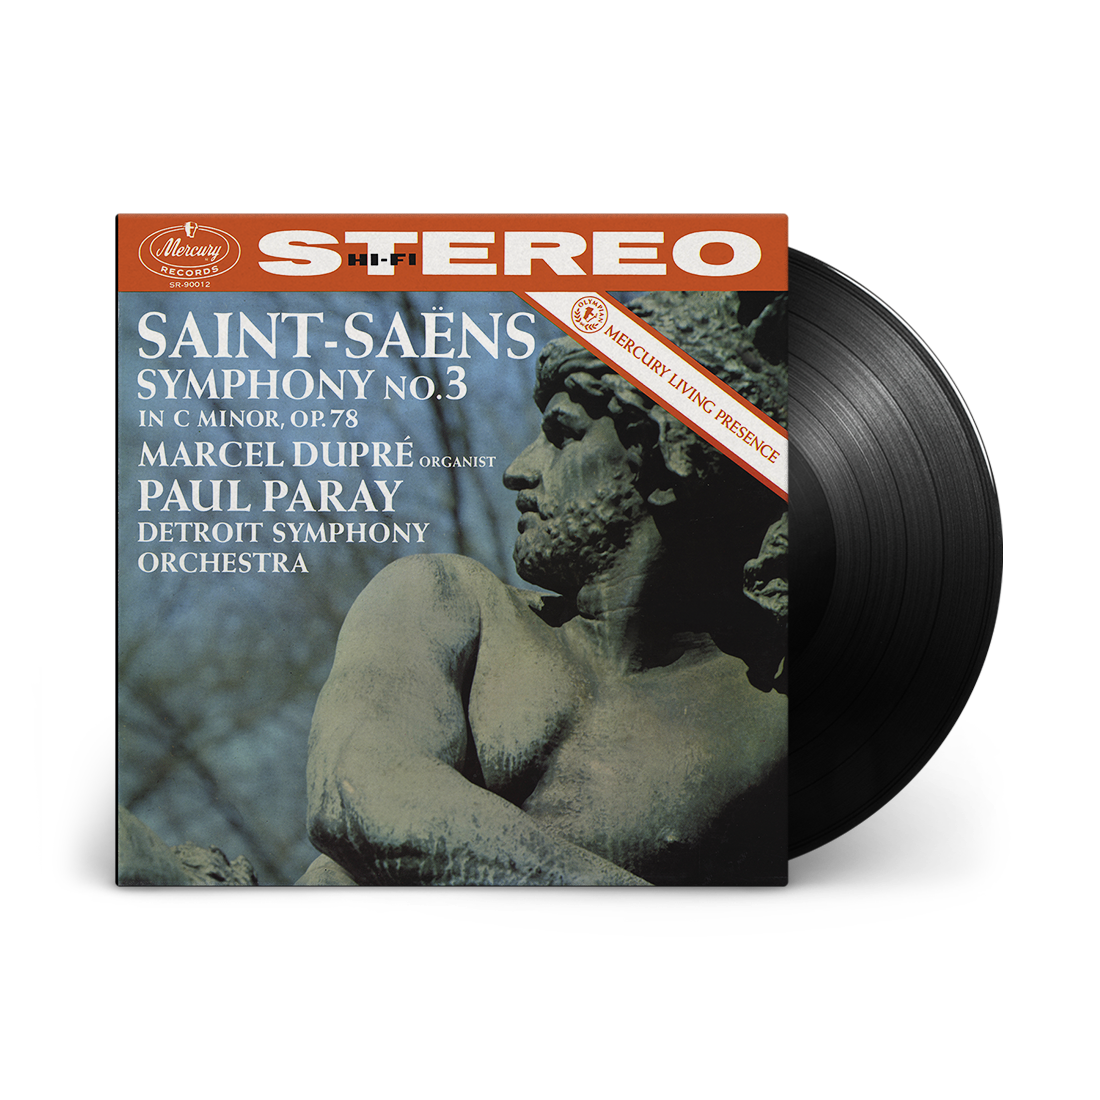 Marcel Dupré, Detroit Symphony Orchestra, Paul Paray - Mercury Living Presence: Saint-Saëns – Symphony No. 3 “Organ” (Half-Speed Vinyl Reissue Series)